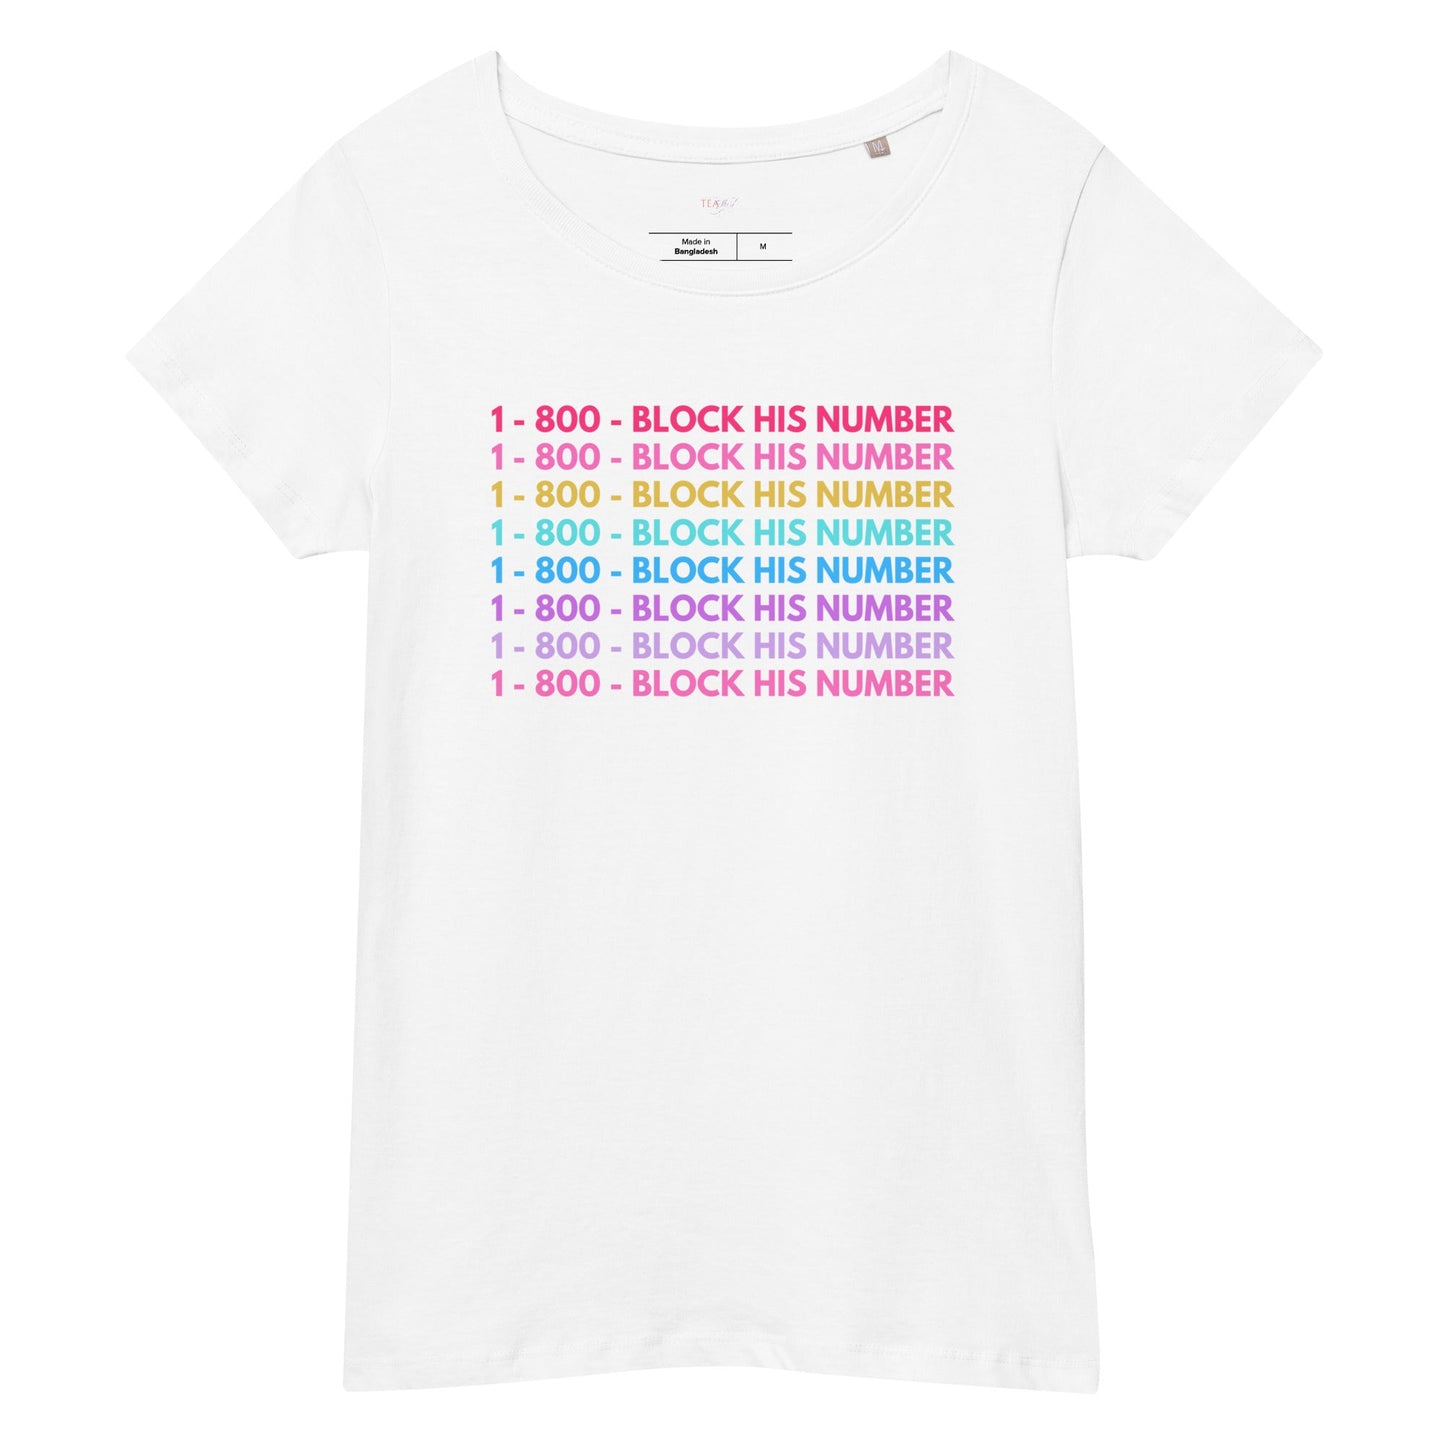 1-800 BLOCK HIS NUMBER | Women’s Premium T-shirt - Catch This Tea Shirts